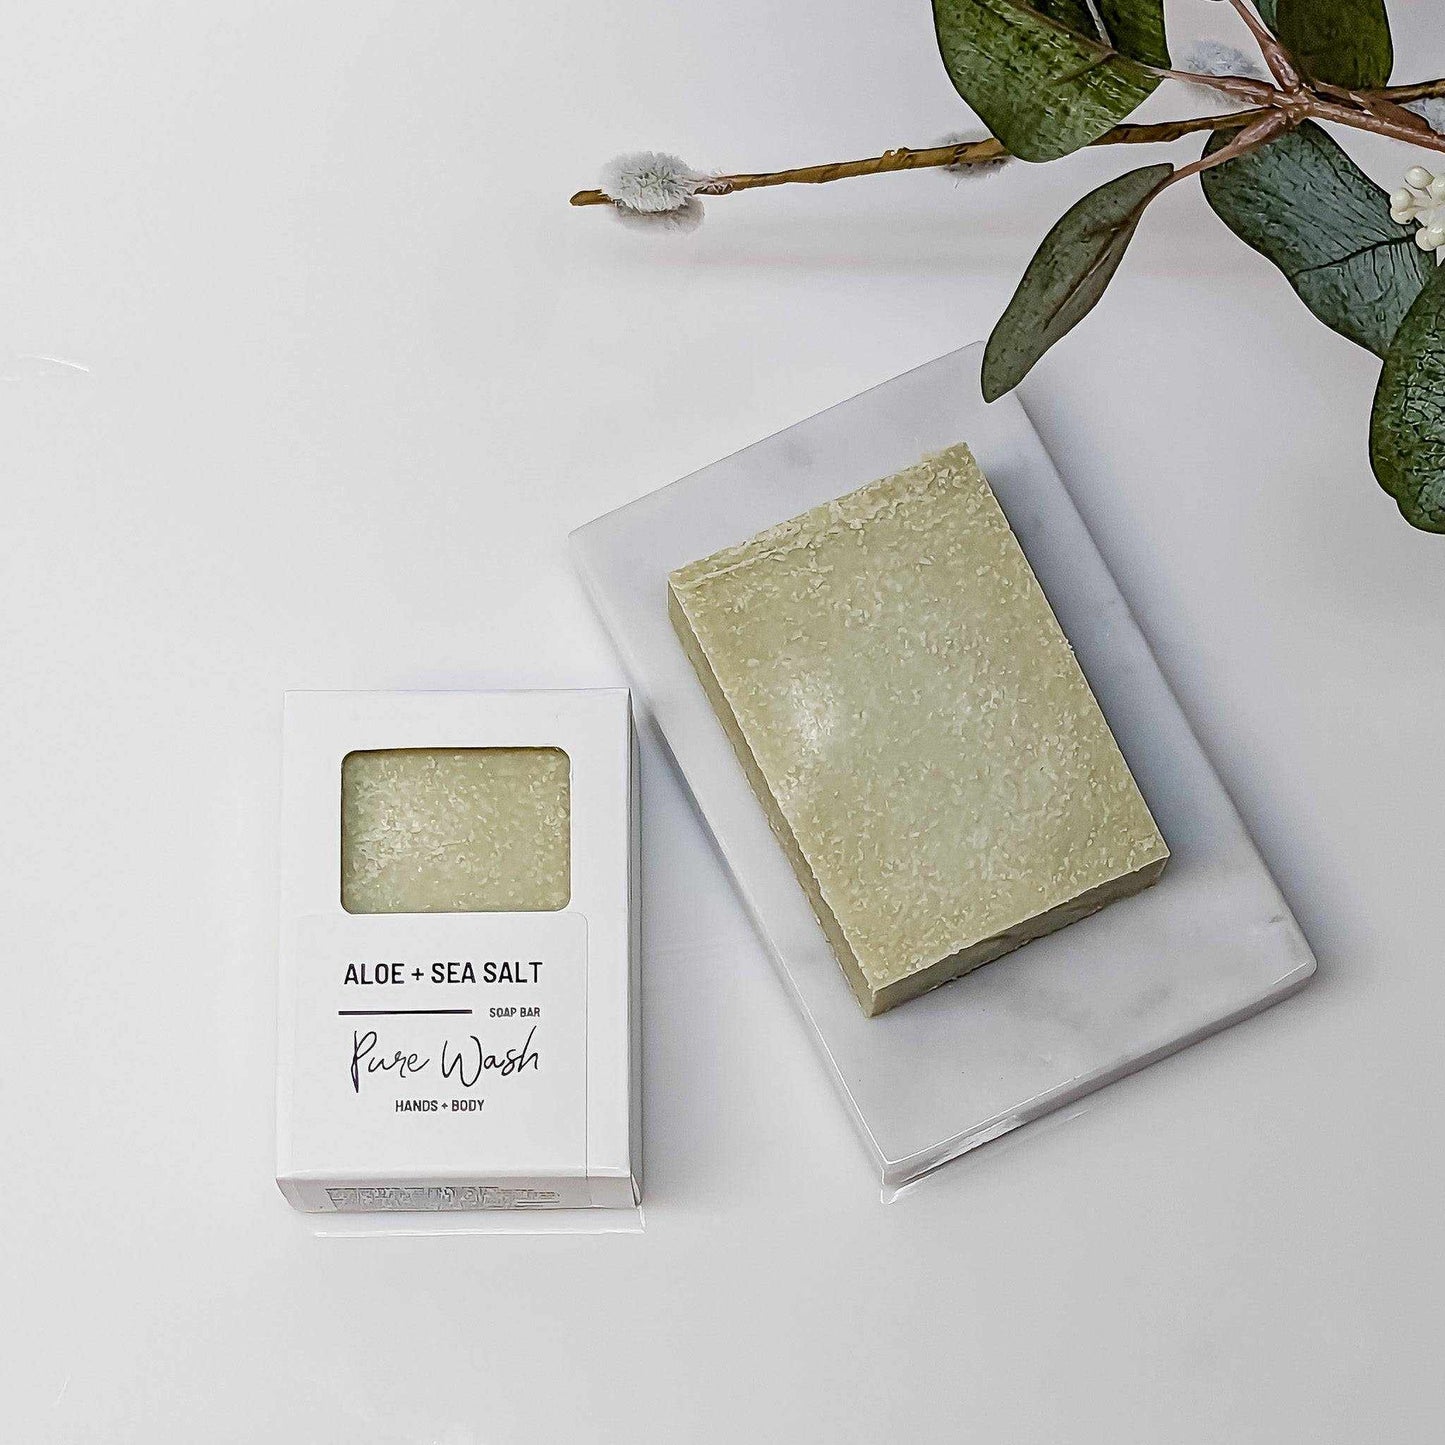 aloe-infused sea salt soap bar, representing clean and conscious bath essentials | CG Pure Wash.